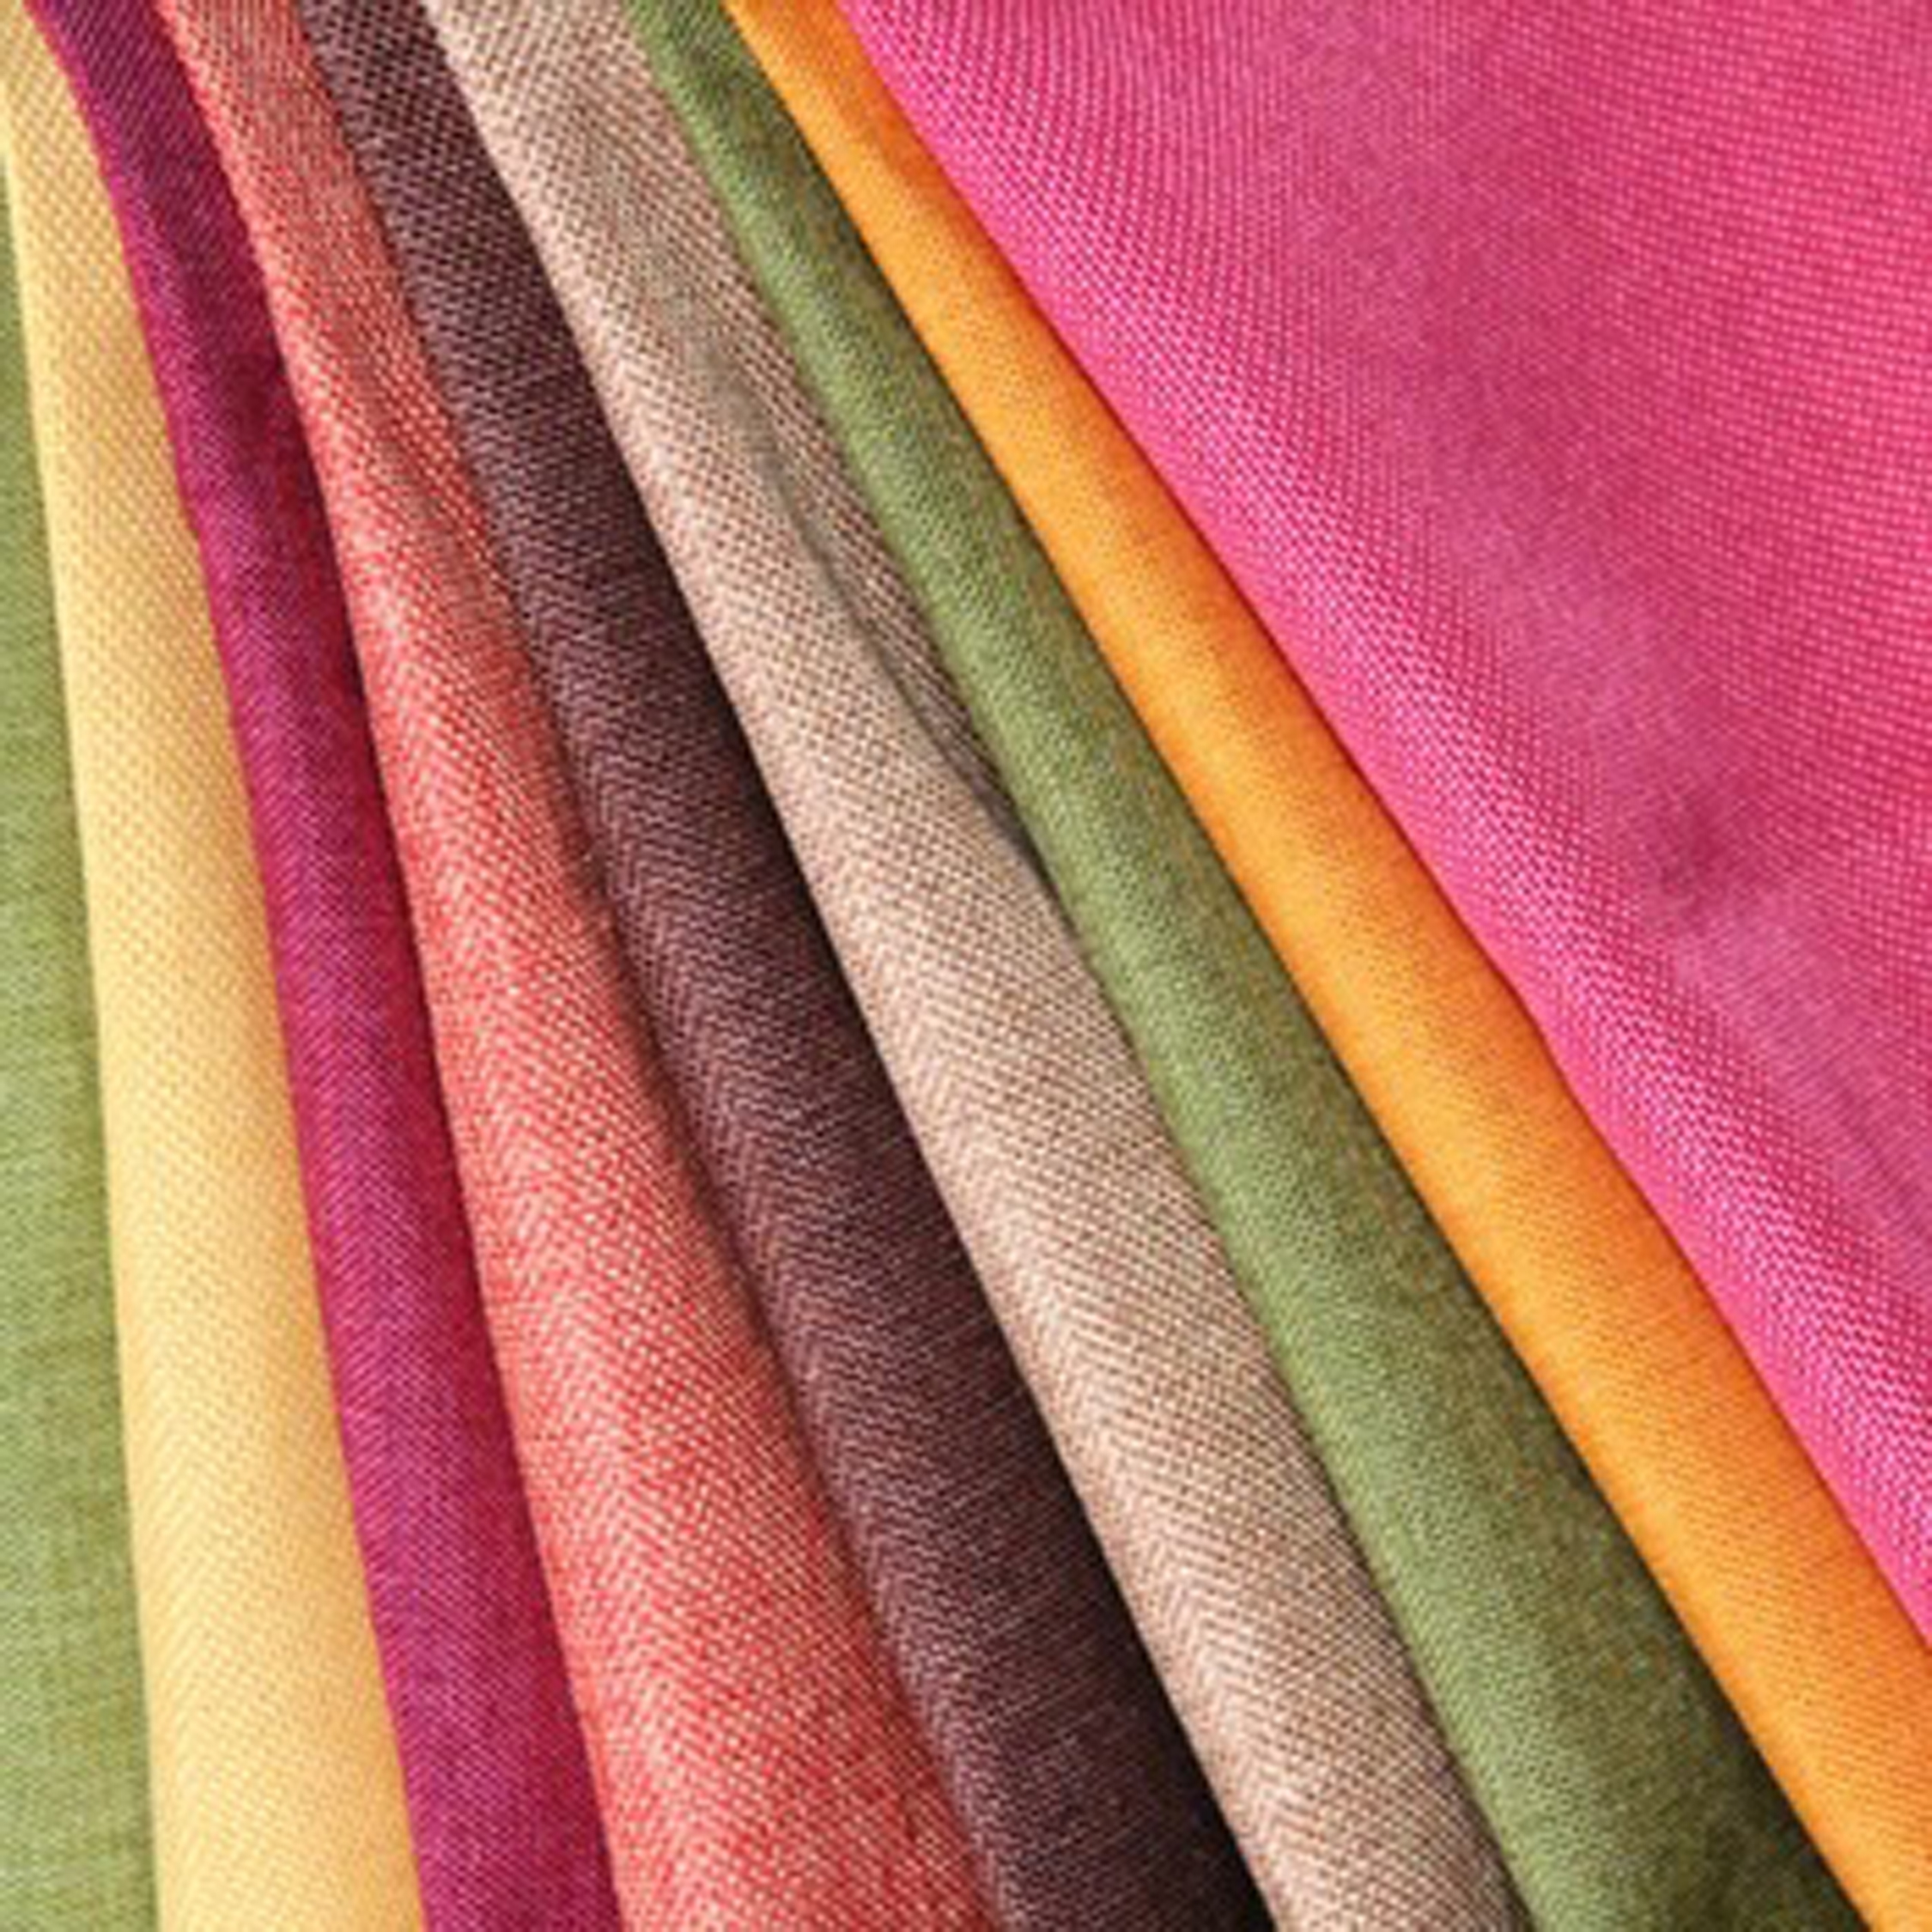 linen cloth in hindi